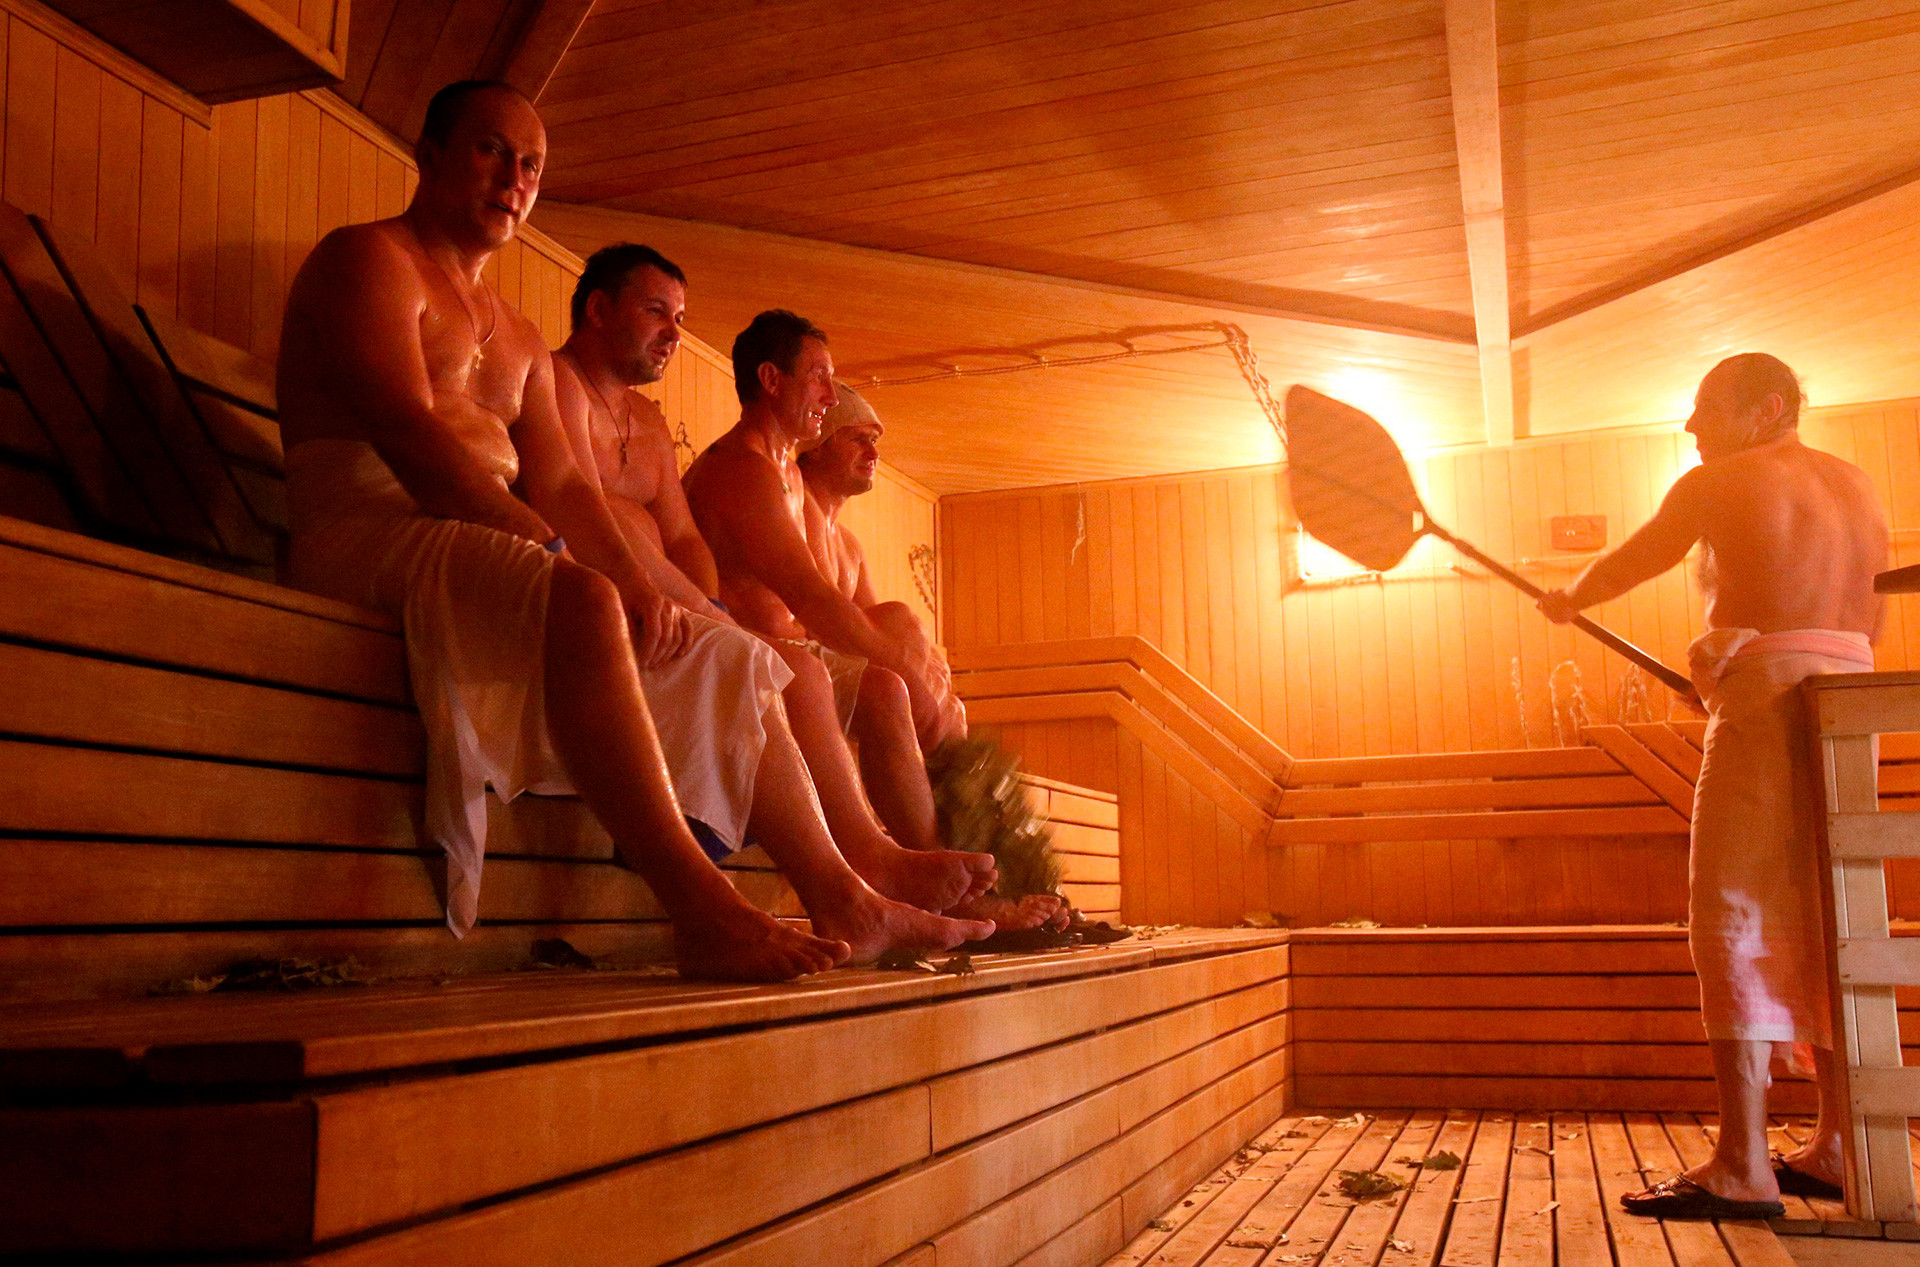 Rublevskie bani sauna complex